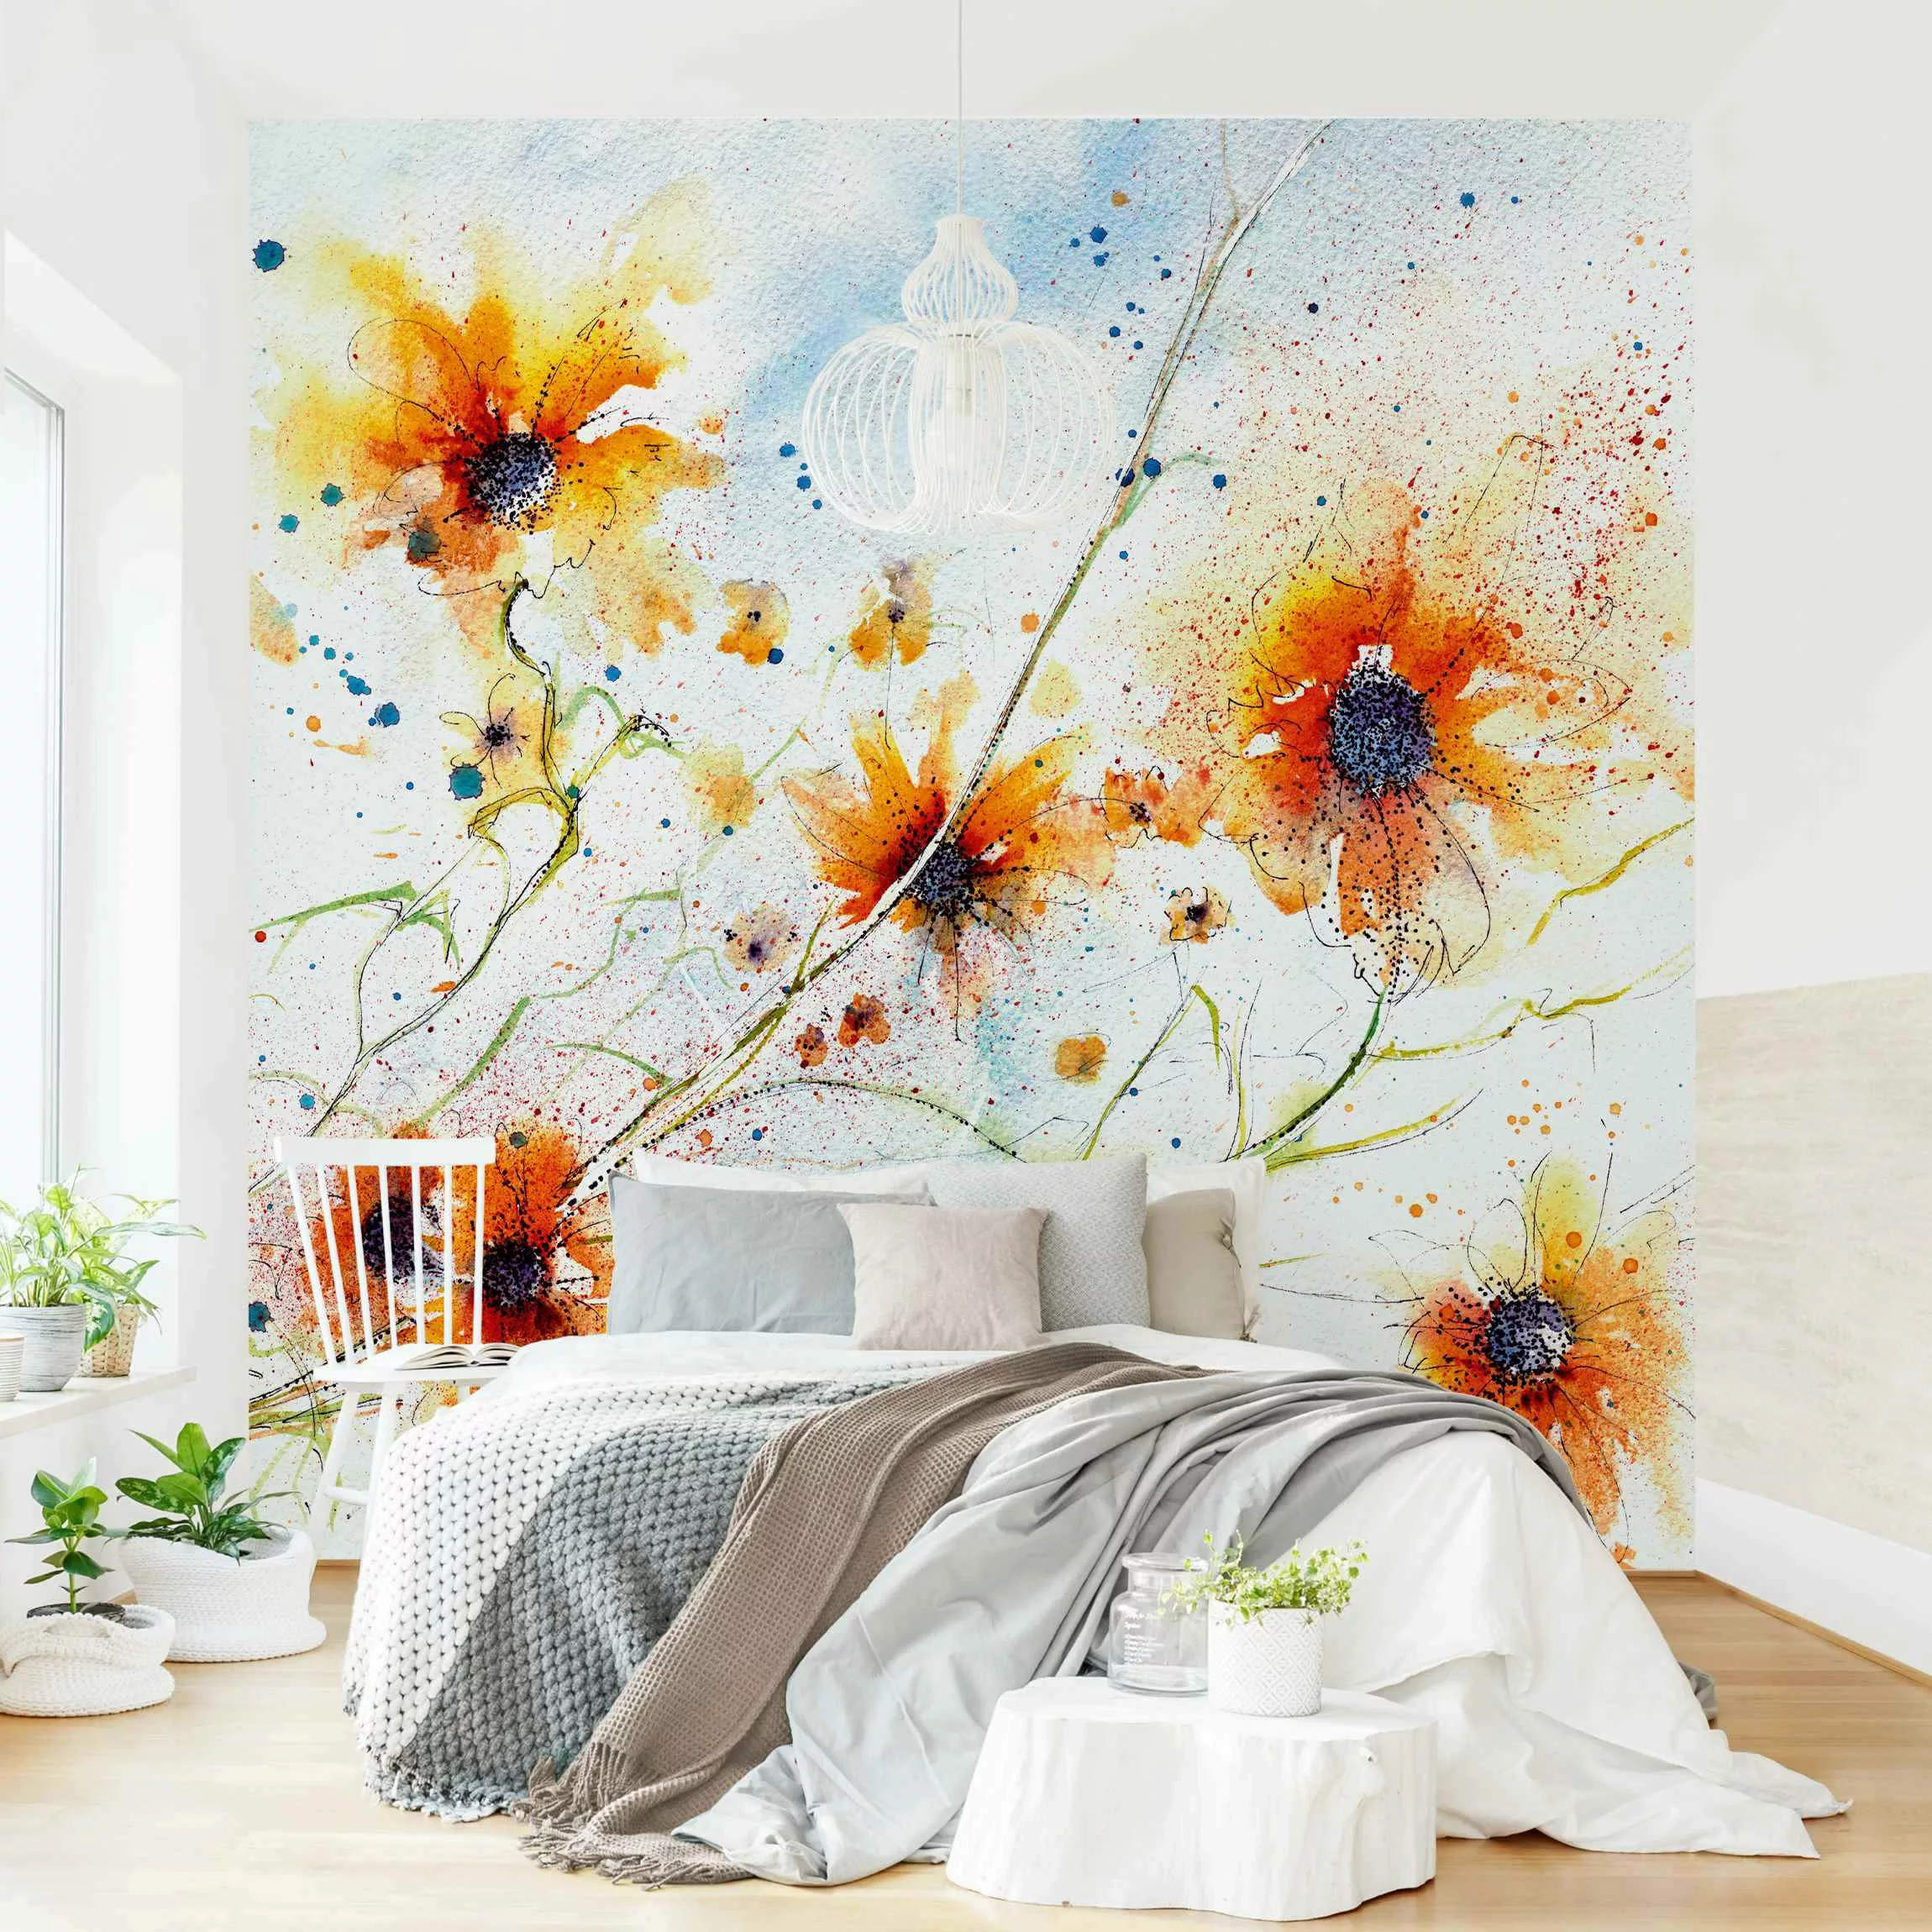 Fototapete Painted Flowers günstig online kaufen